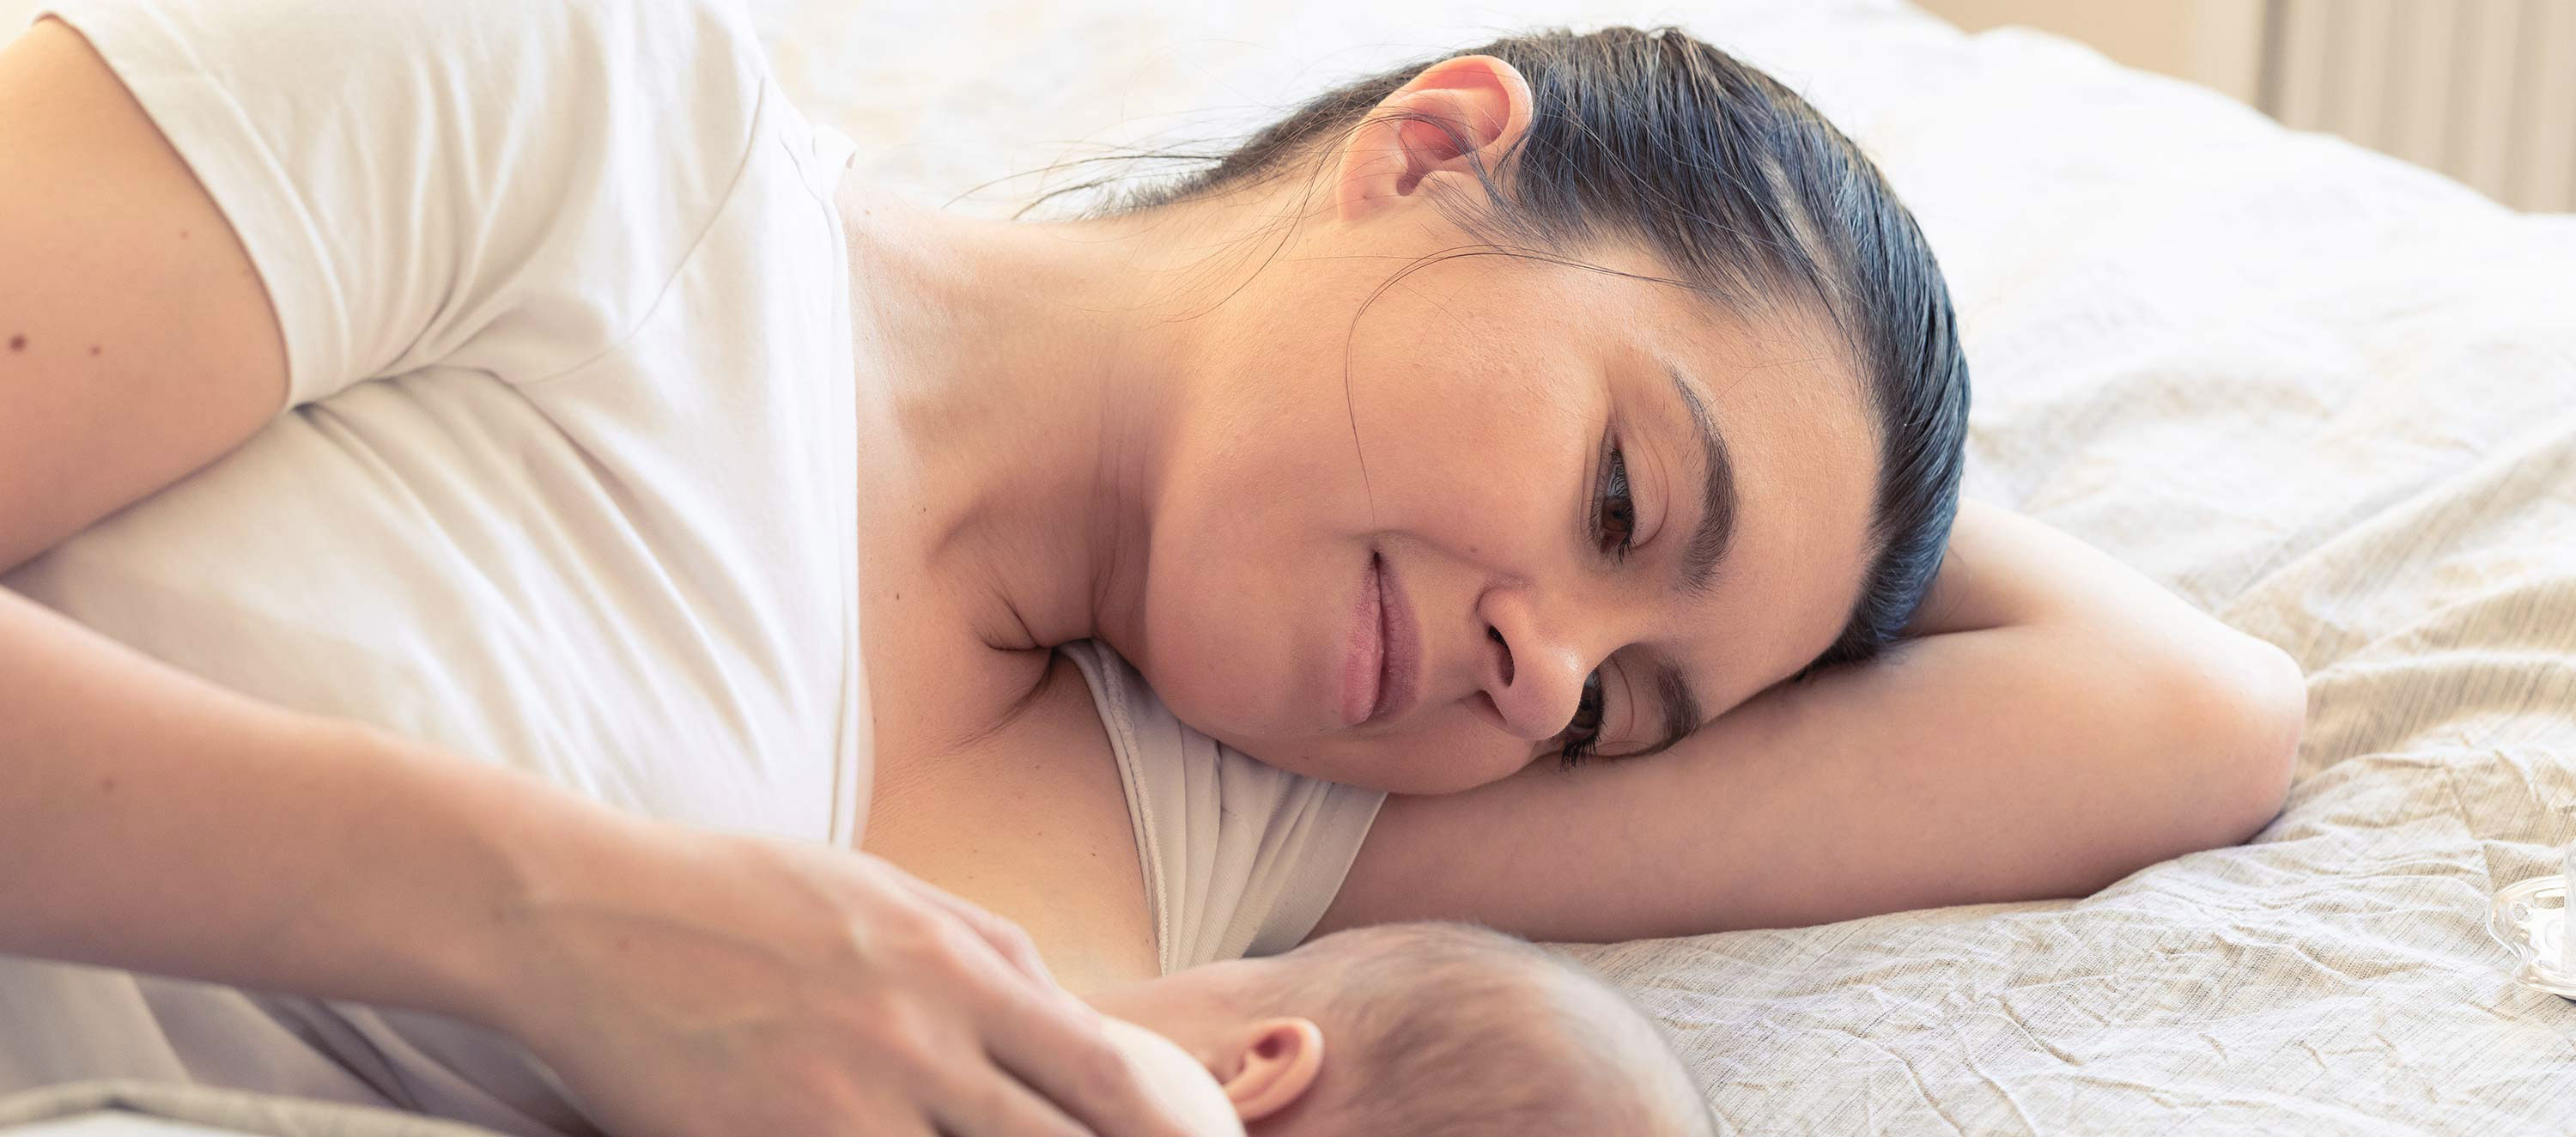 Frau liegt mit Säugling stillend im Bett liegen. 